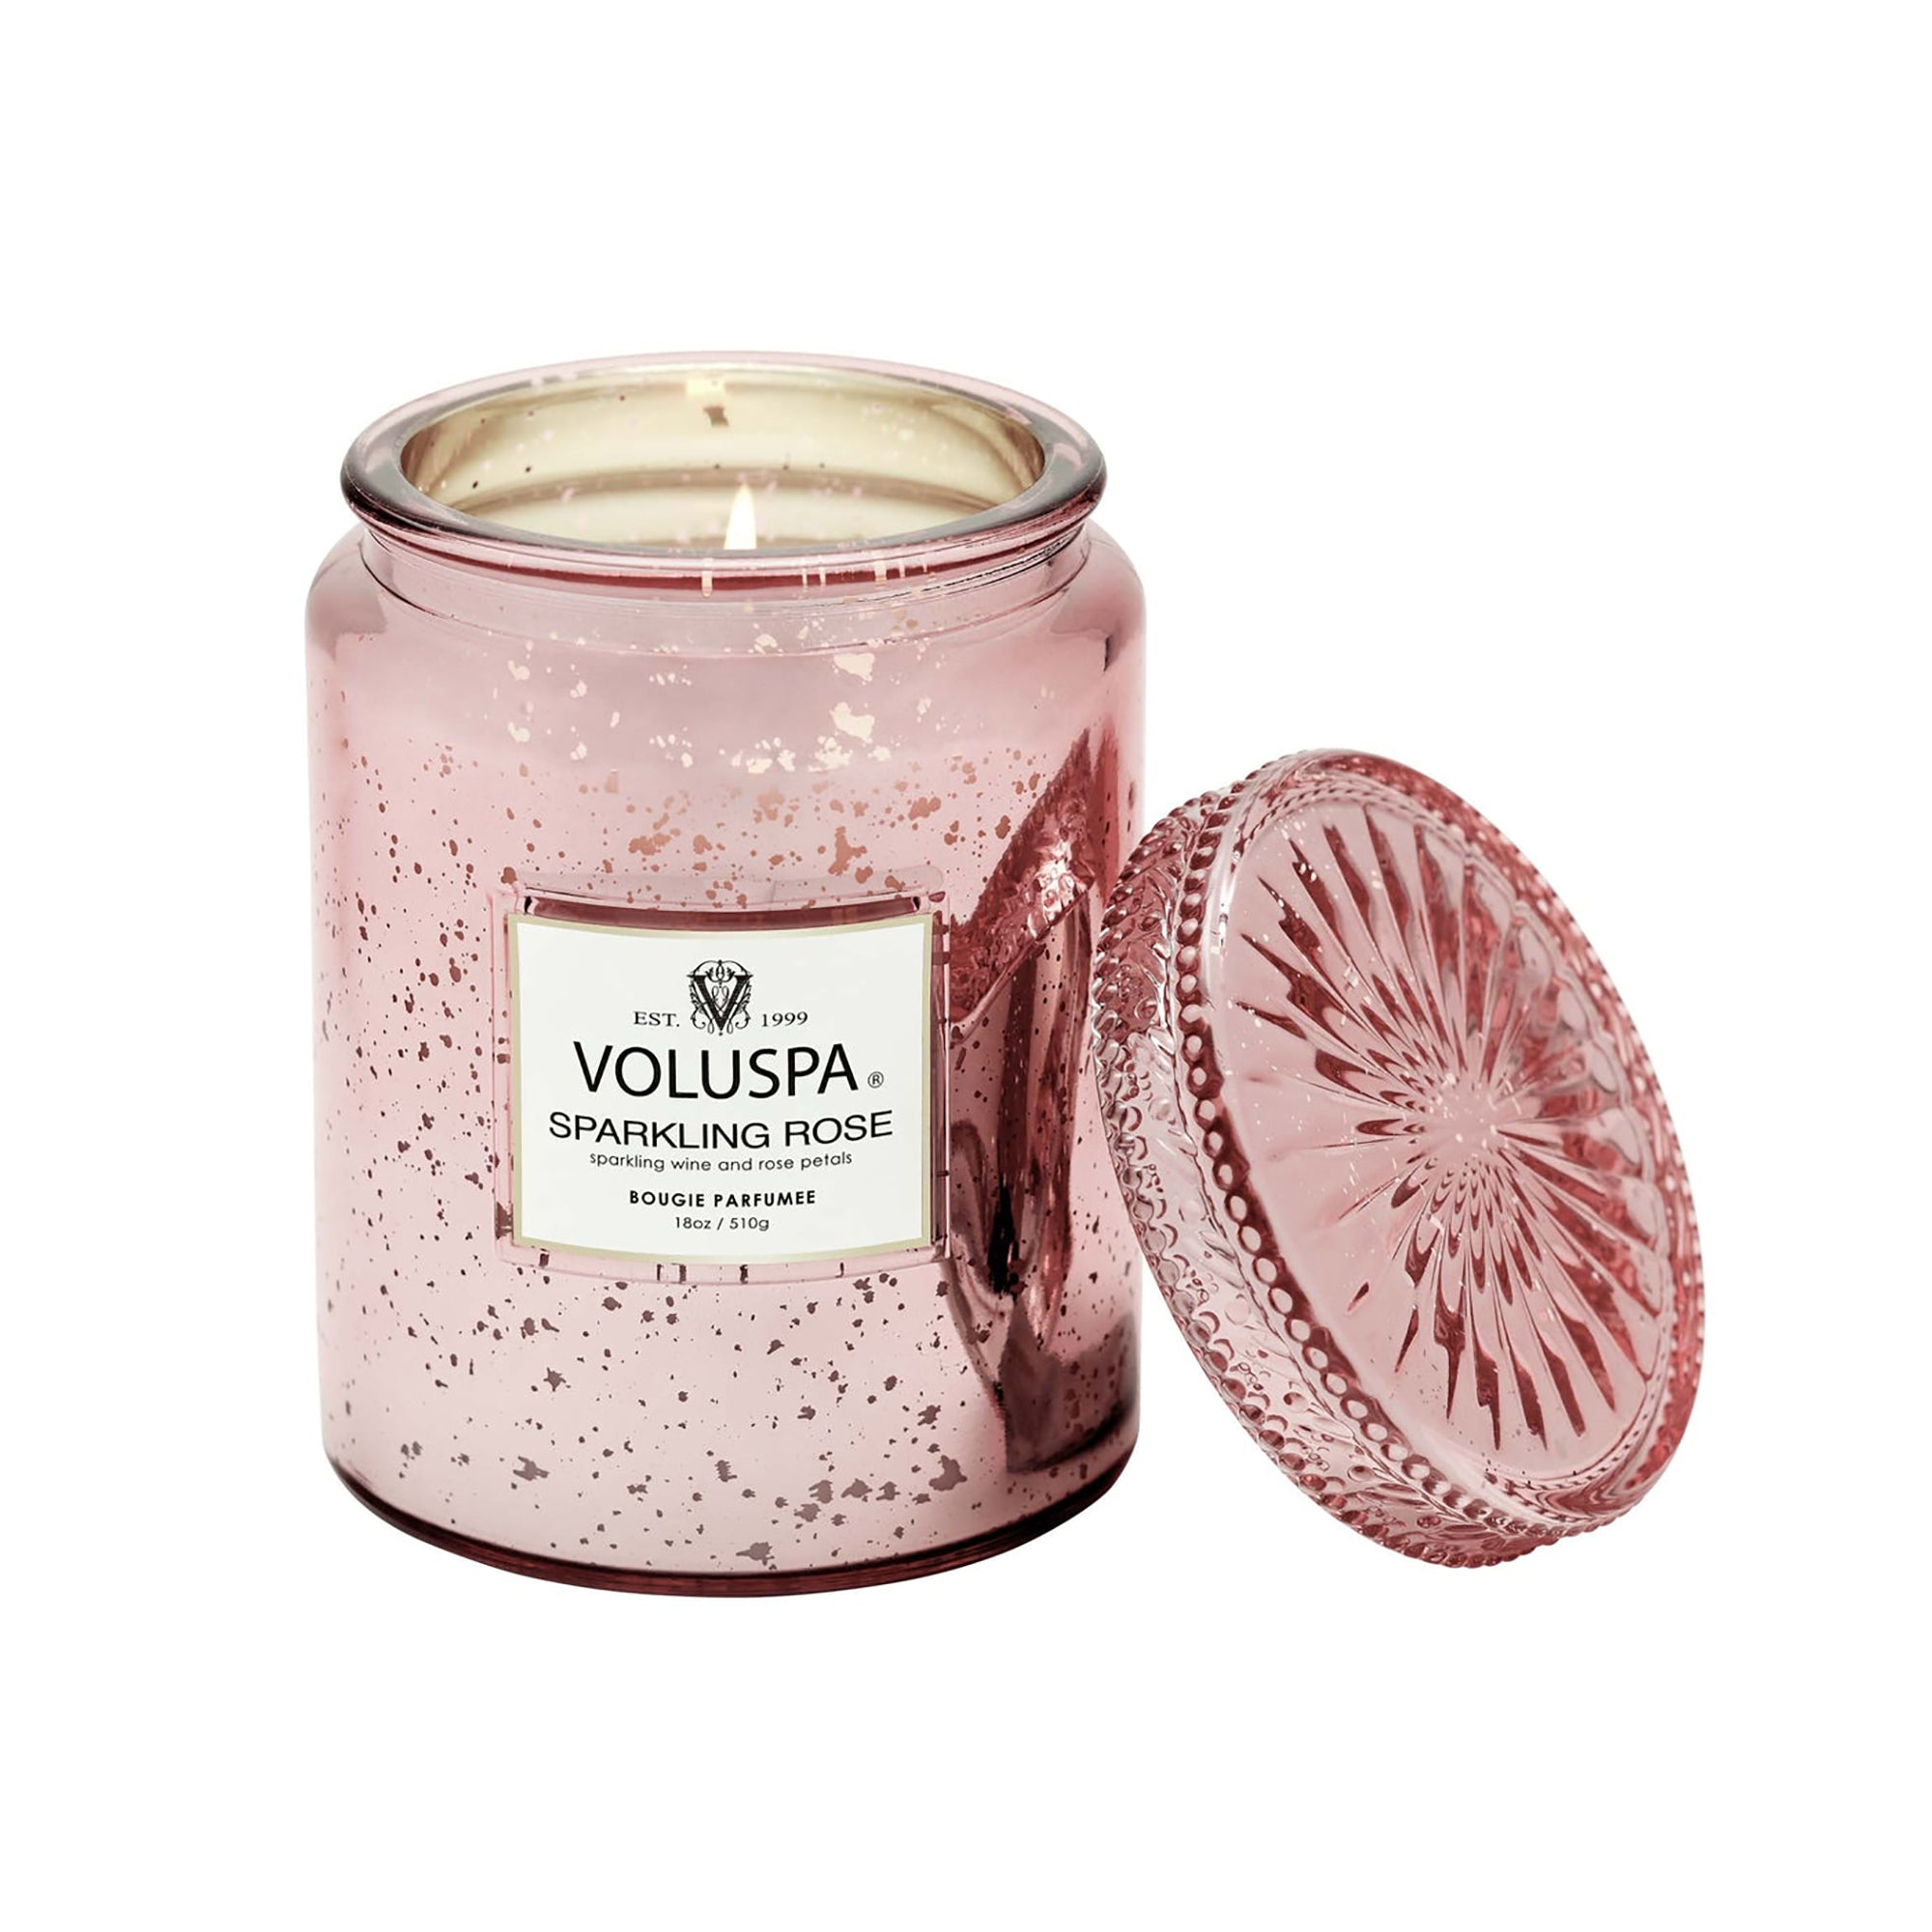 Voluspa Vermeil Large Jar Candle 18oz / SPARKLING ROSE